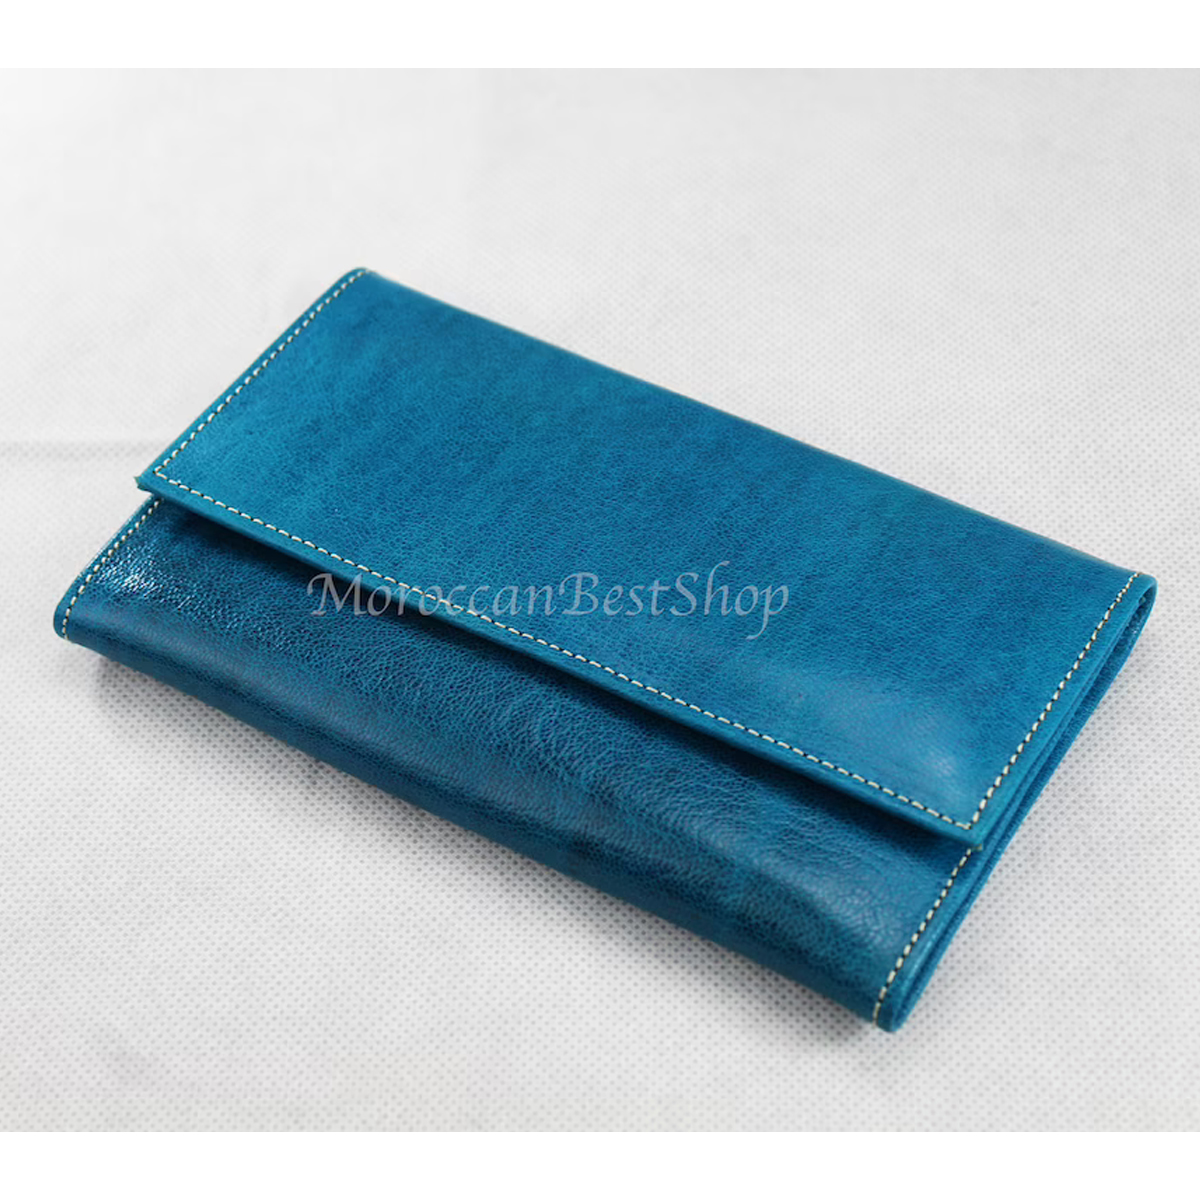 Bags & Purses Wallets & Money Clips Wallets Women's wallet turquoise 